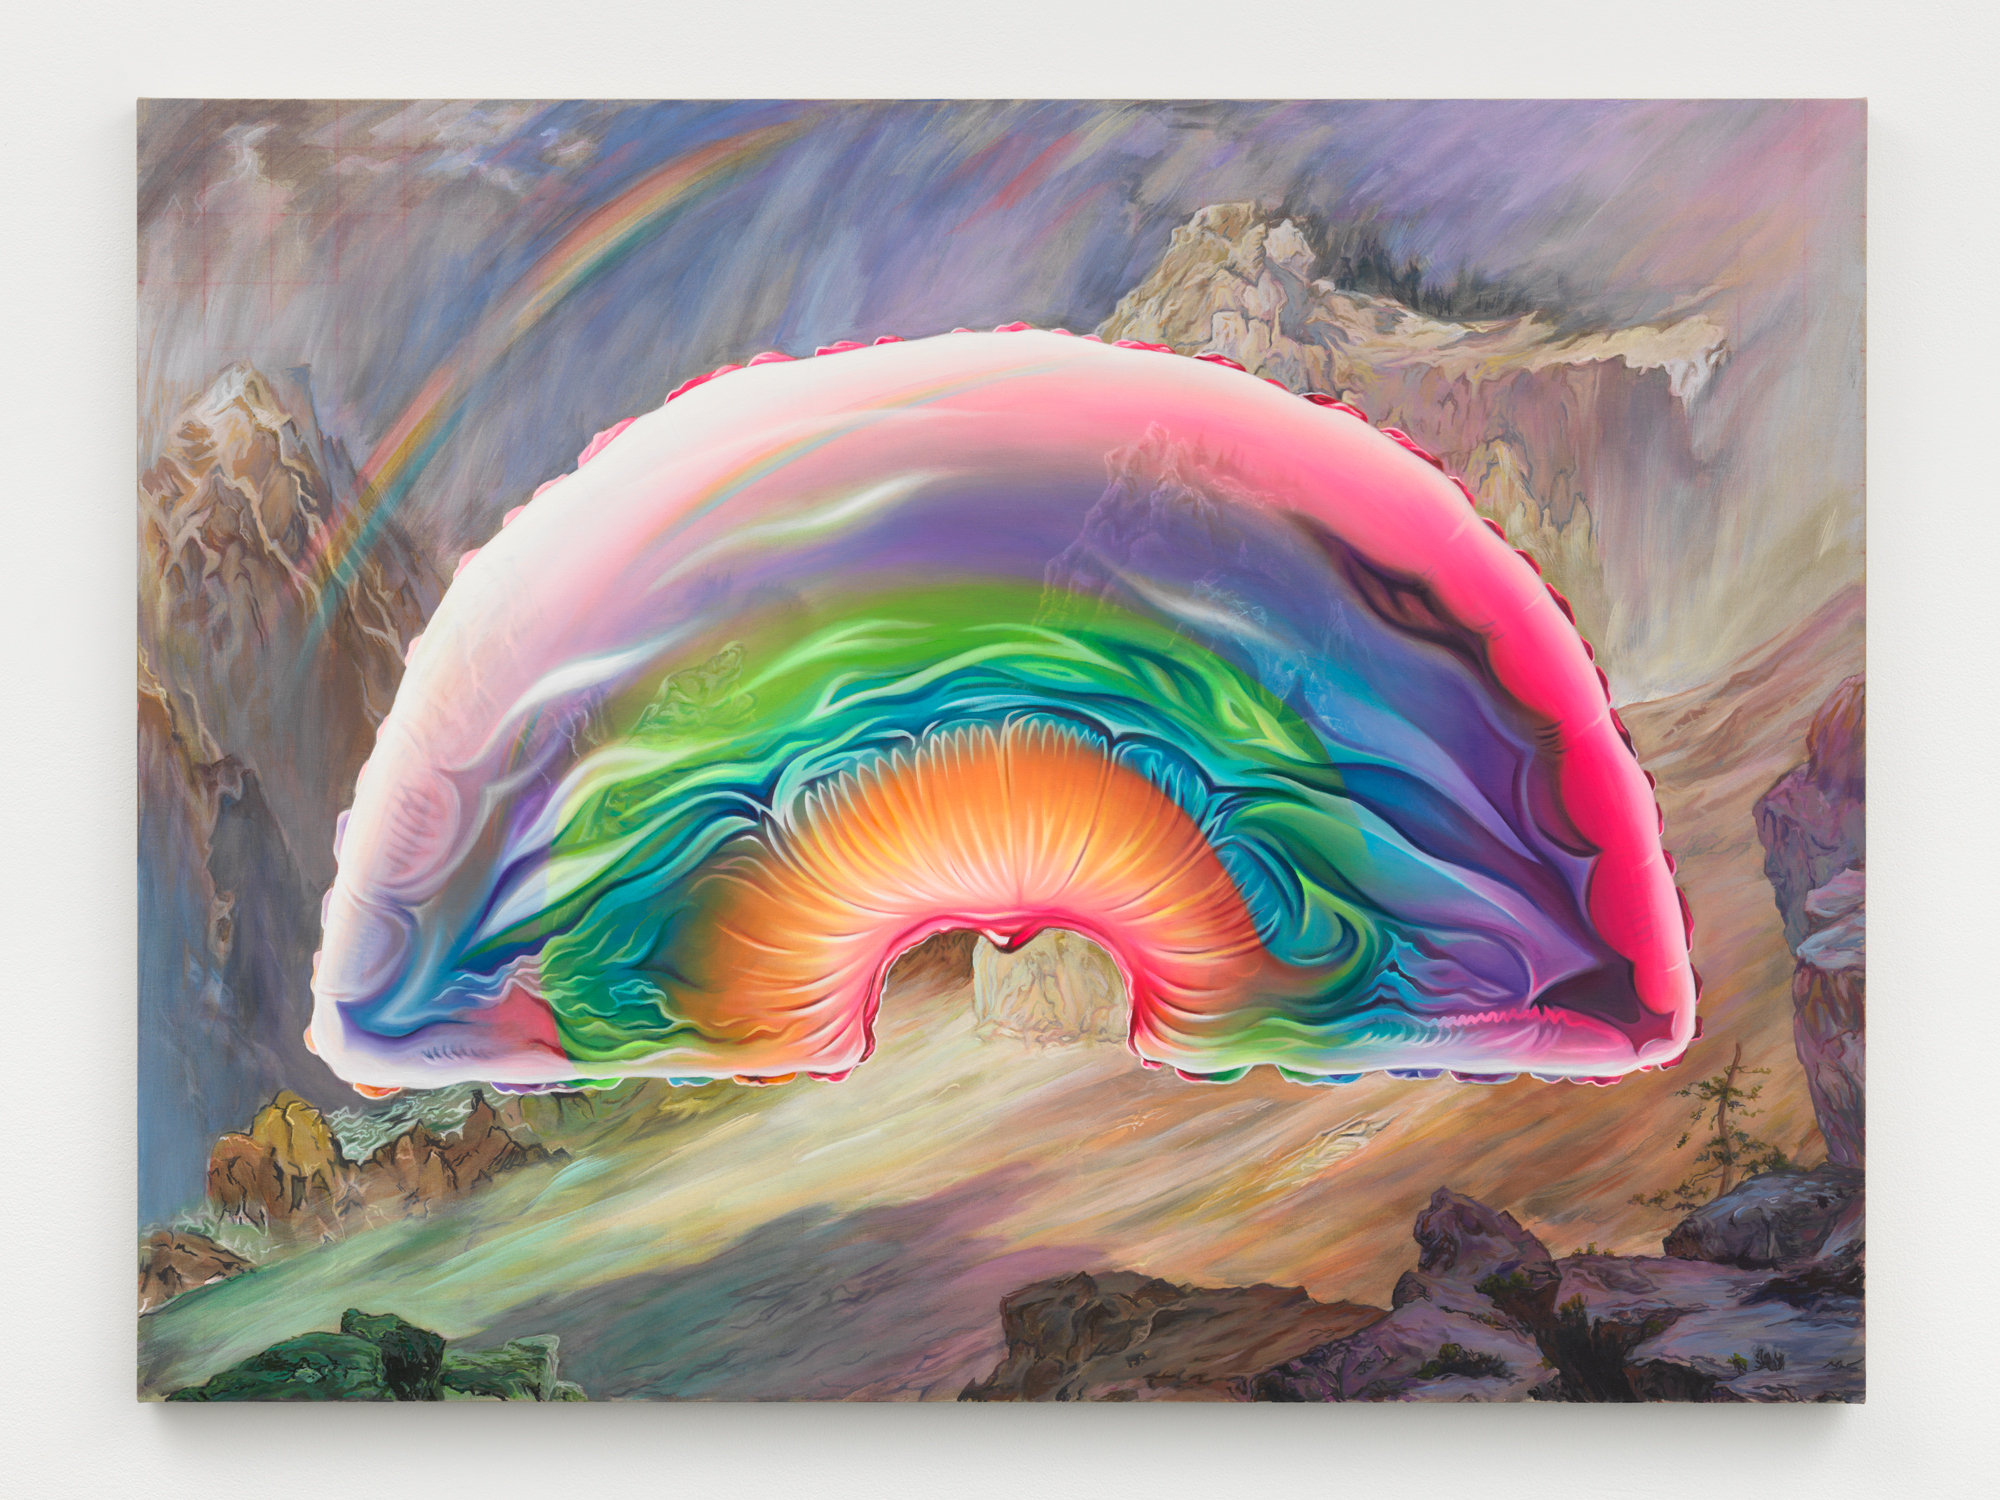 Chason Matthams, Rainbow Balloon 5 (a bigger rainbow and a rainbow within) with Thomas Moran's 